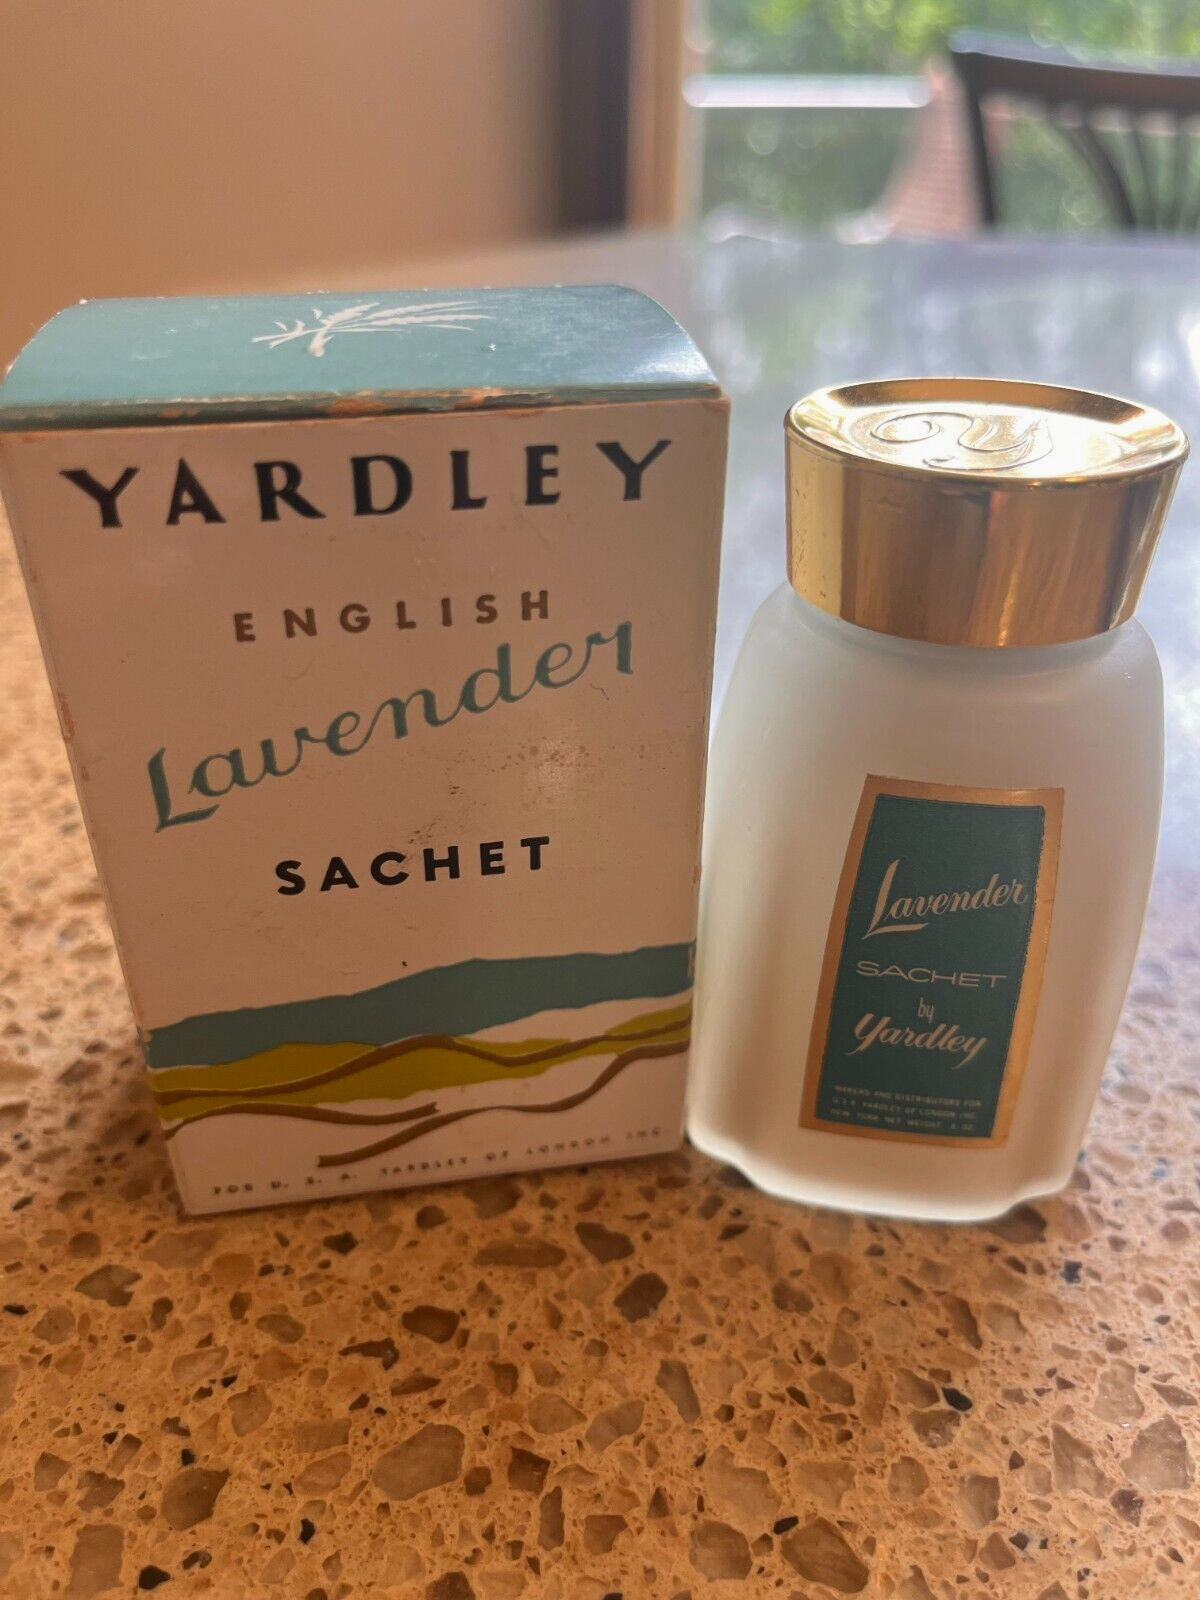 VTG 1950s YARDLEY English Lavender SACHET Powder NO 1644 In Original Box \